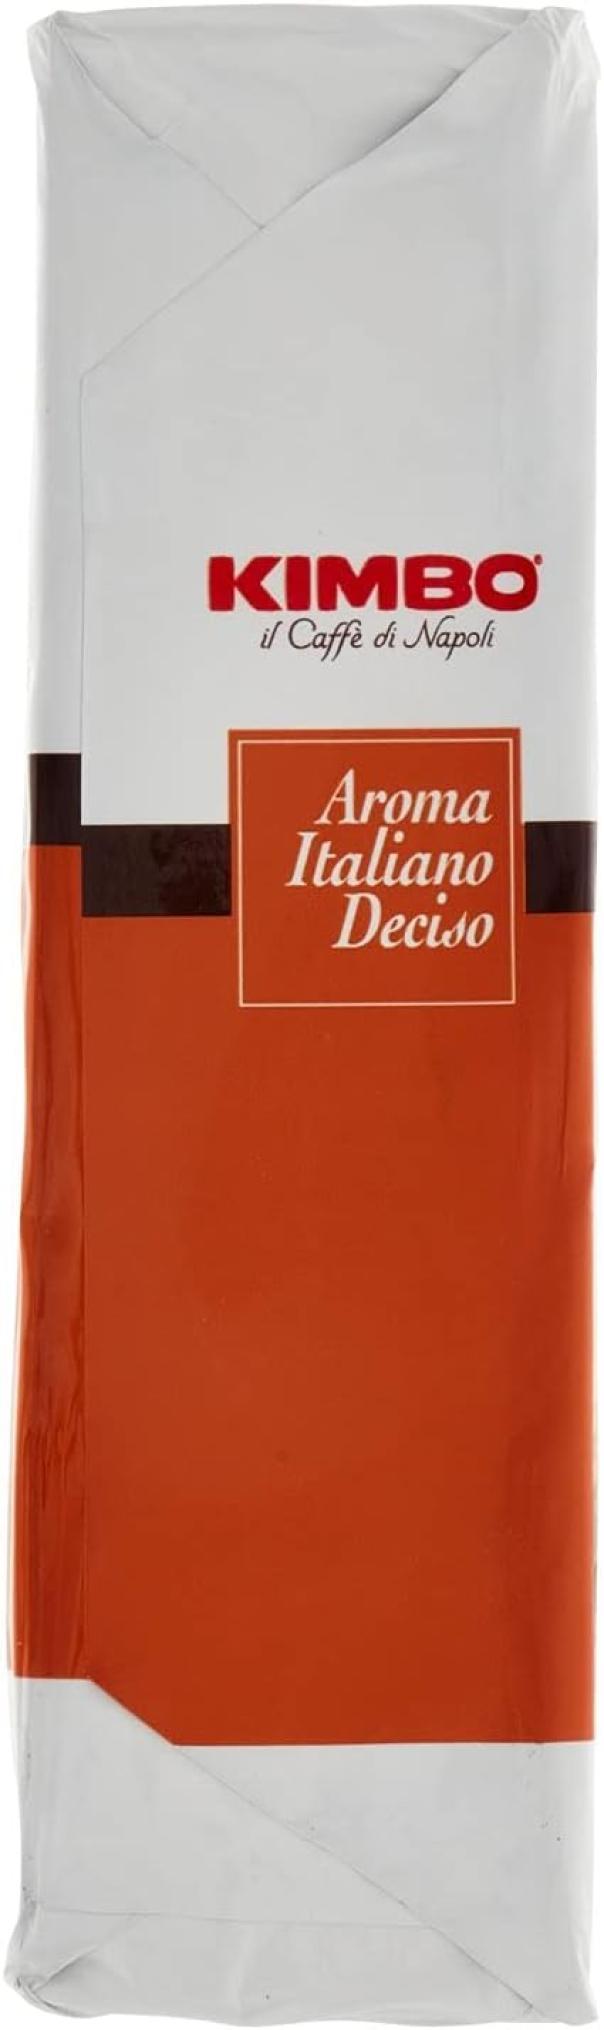 caffu00e8-aroma-italiano-deciso-kimbo-4x250gr-2